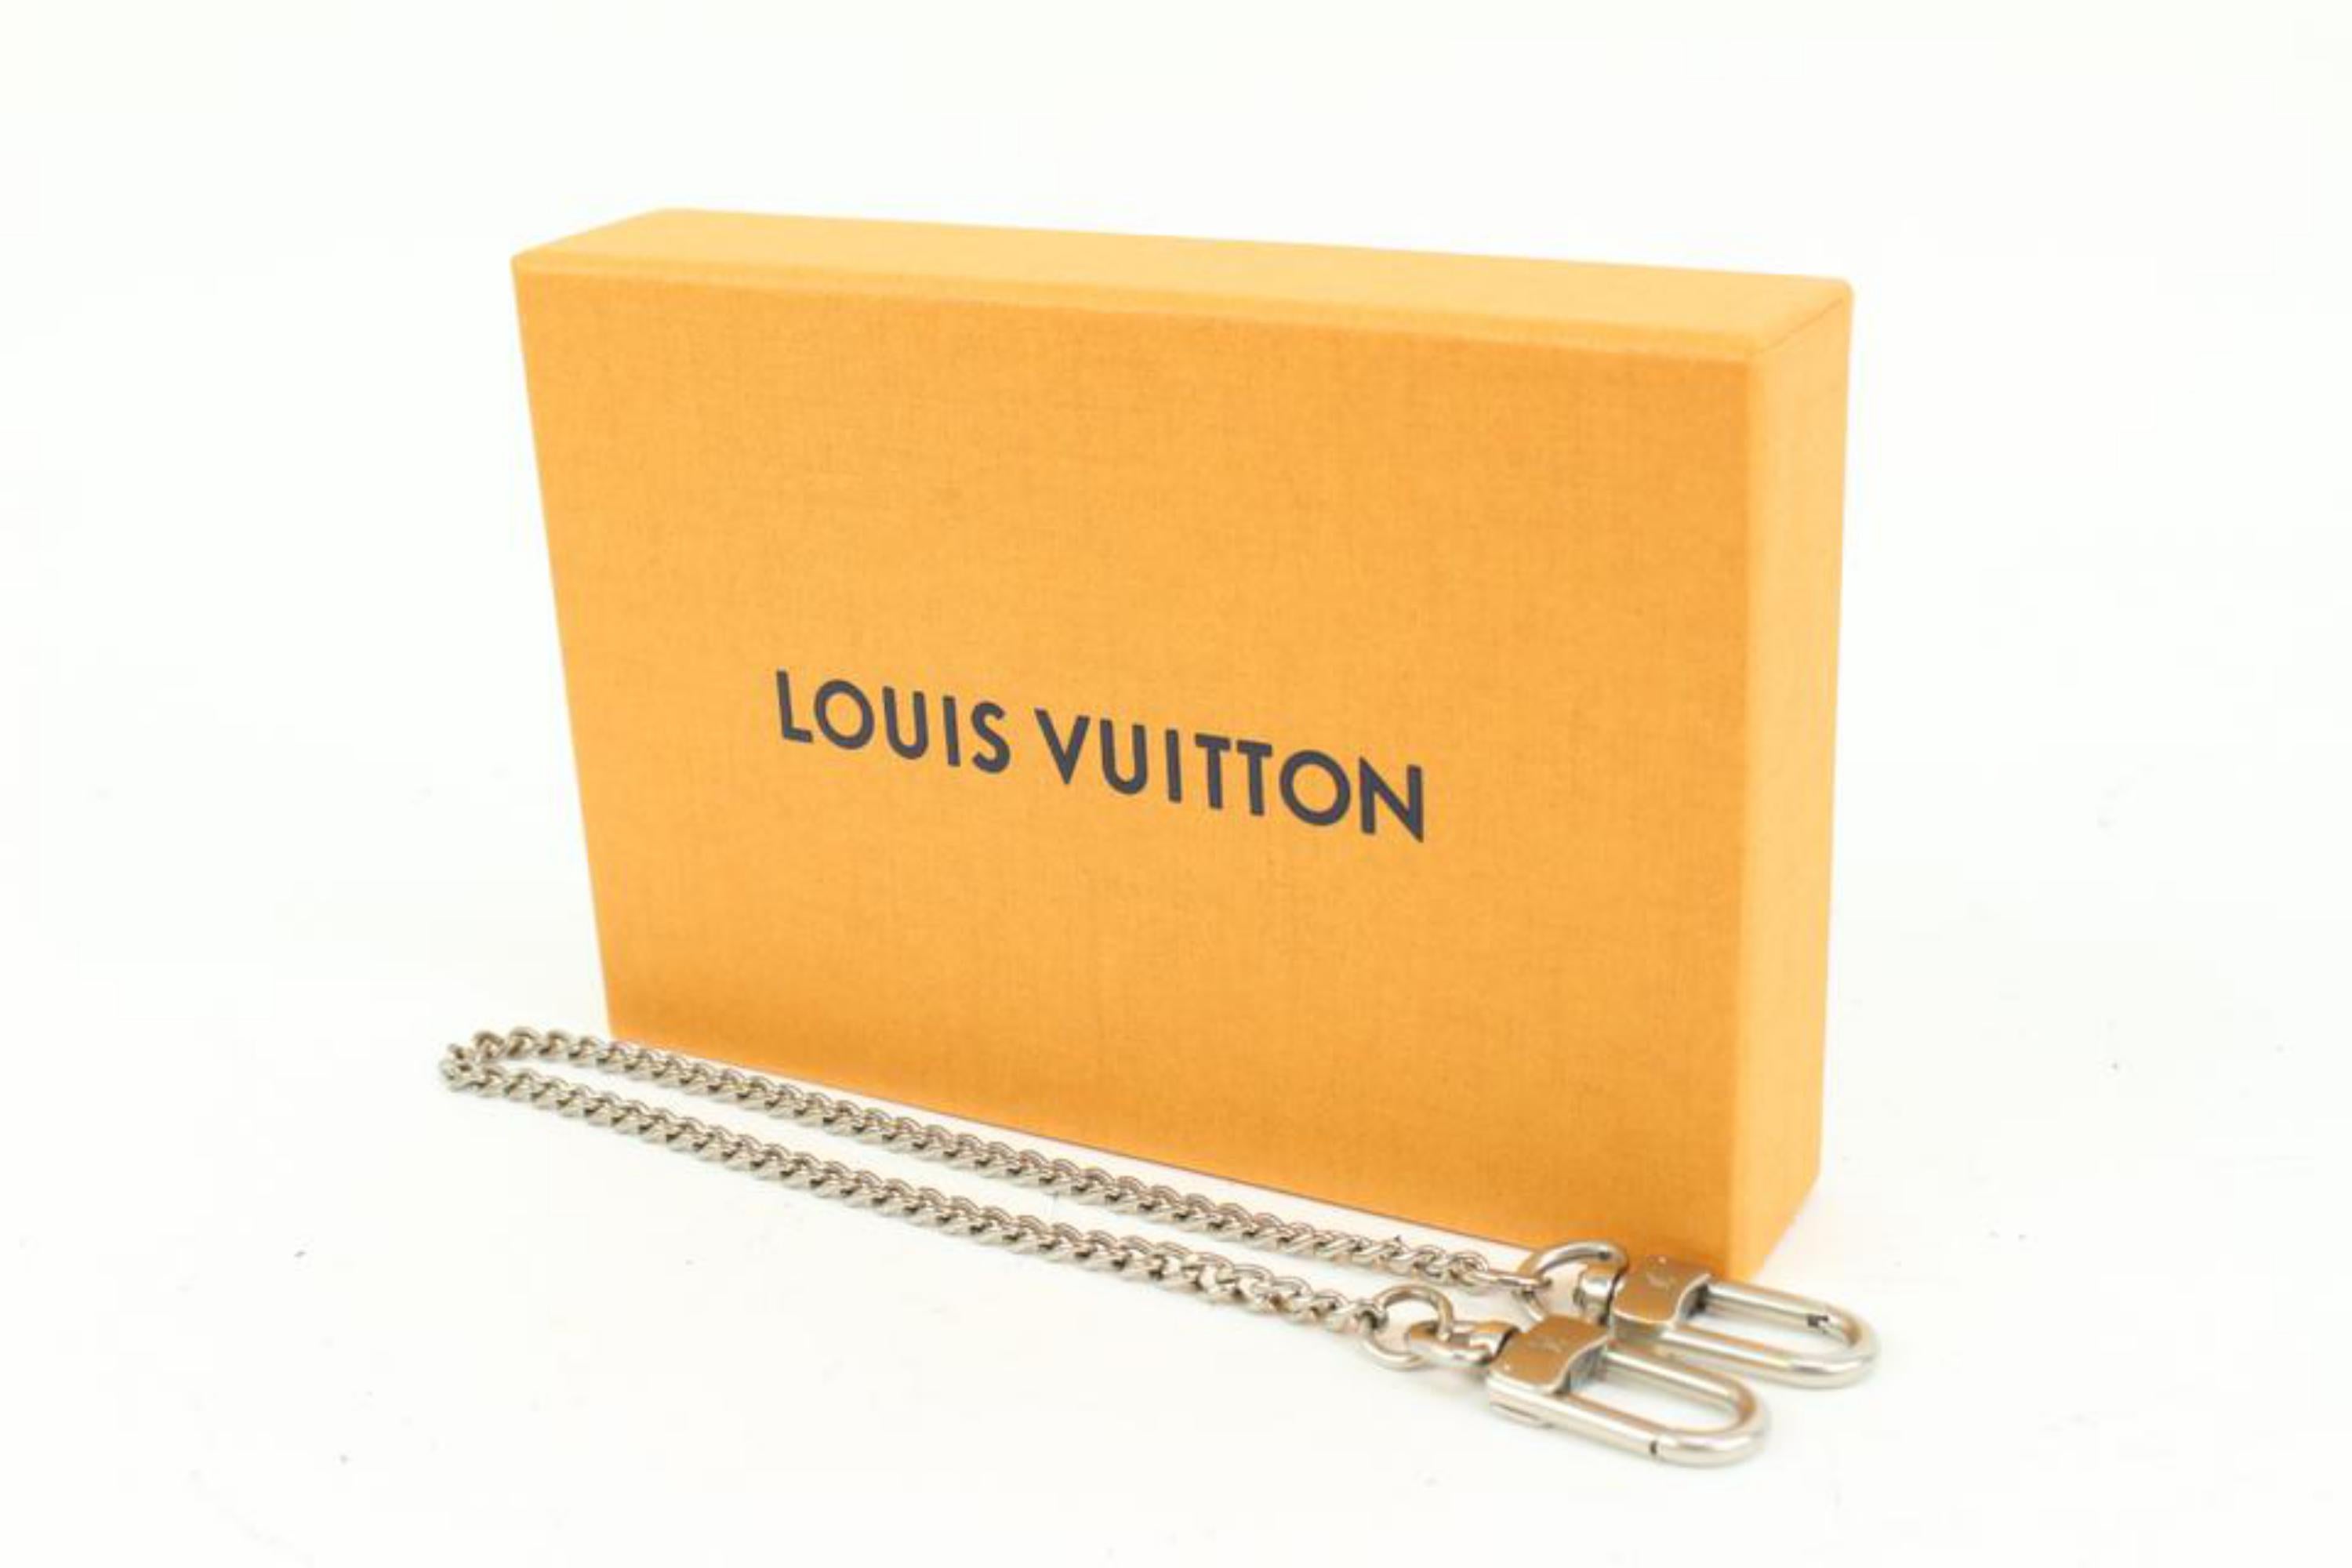 Louis Vuitton Silver Chain Strap or Pochette Extender 82lk52s at